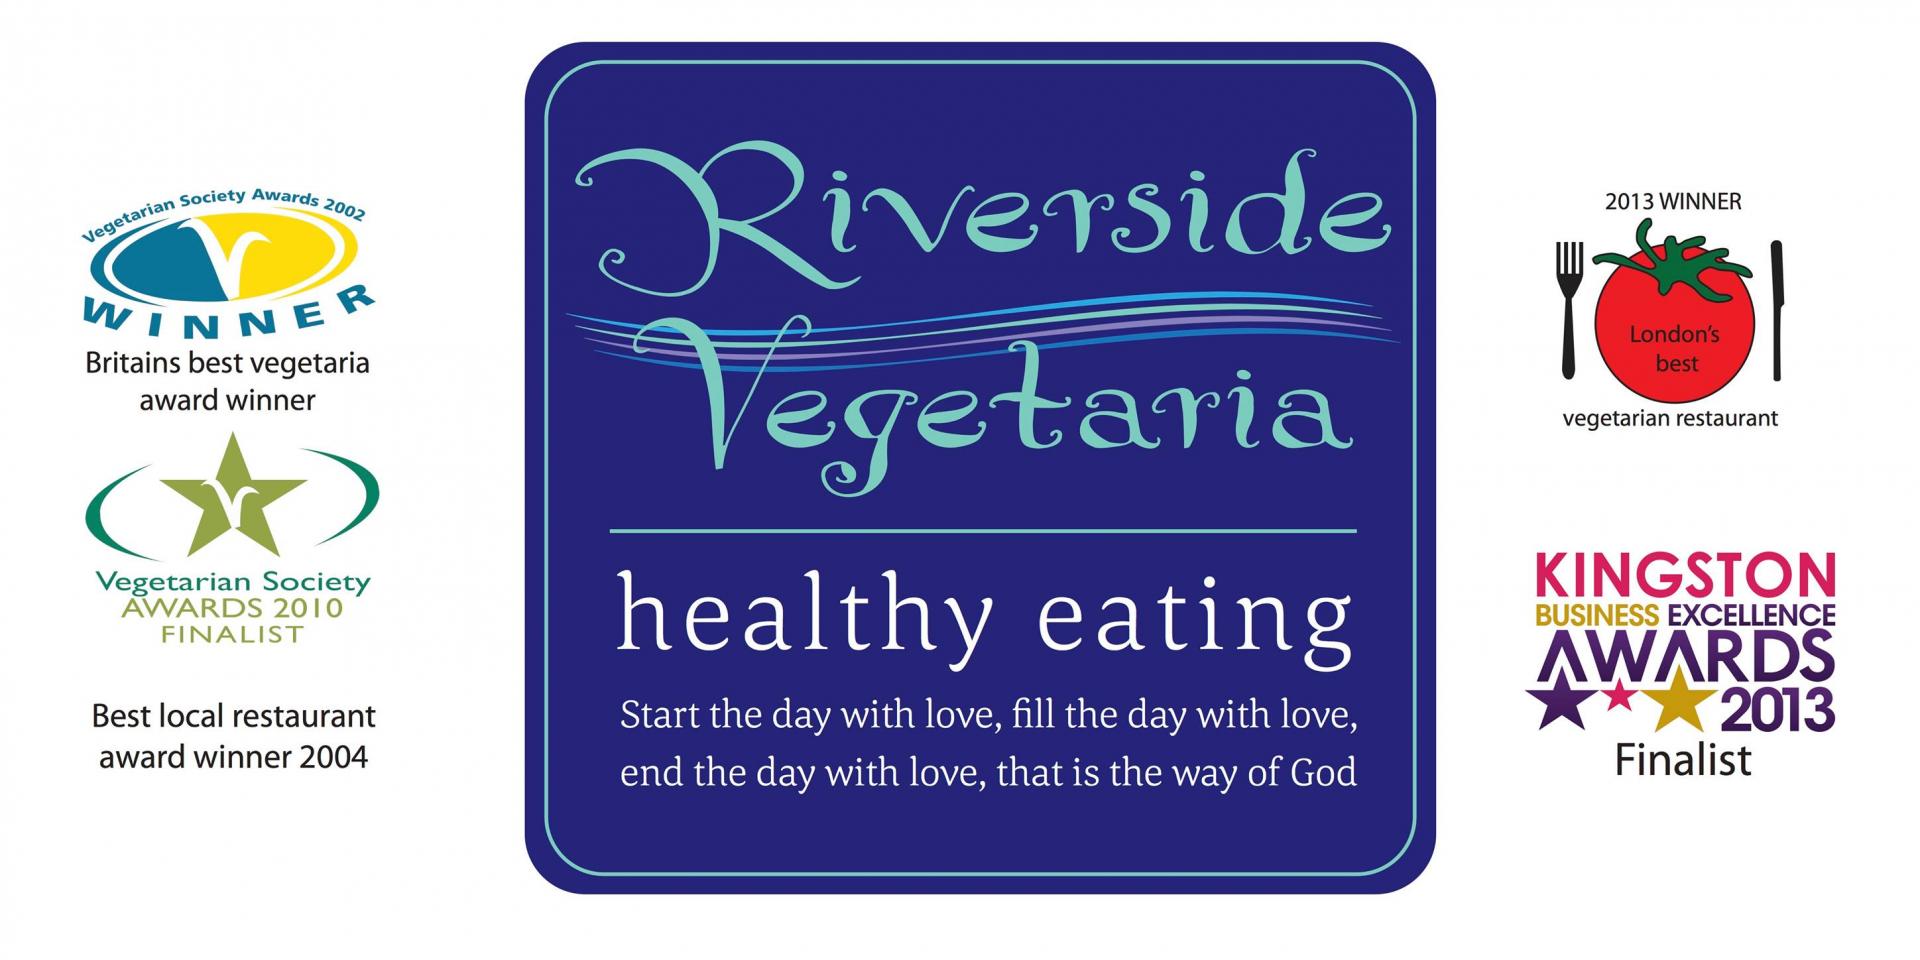 The Riverside Vegetaria